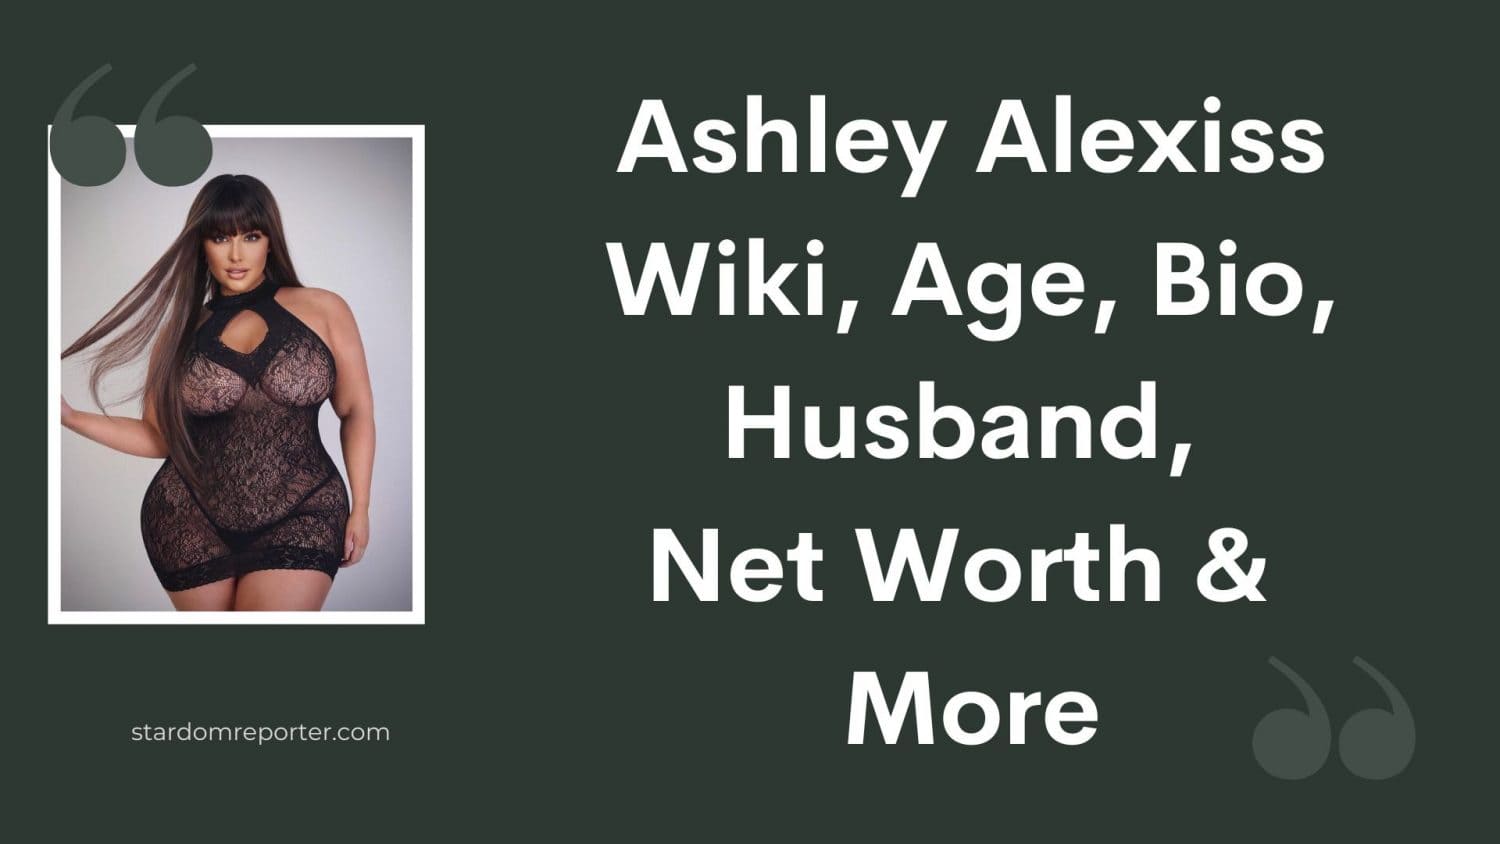 Ashley Alexiss Wiki, Age, Bio, Husband, Net Worth & More - 41